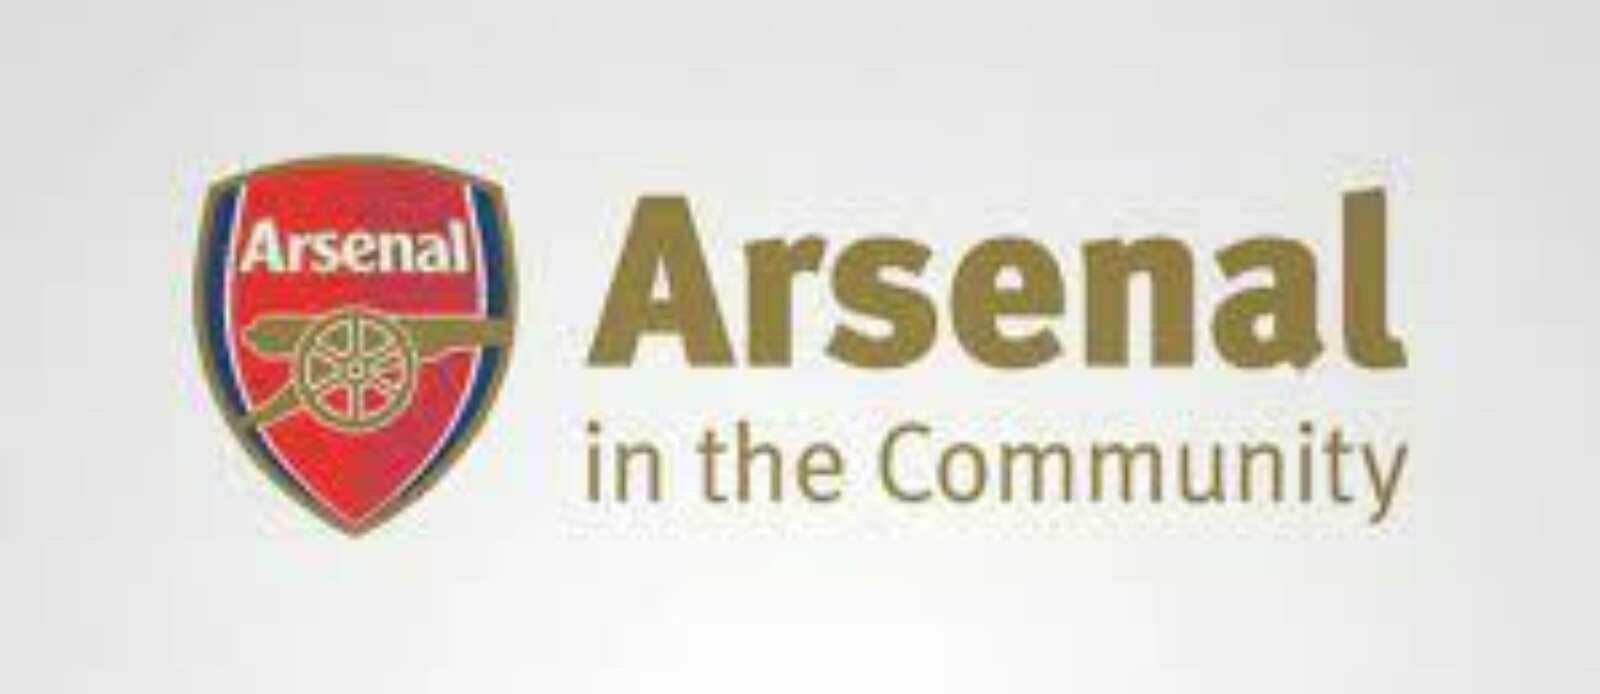 Arsenal Community Coach Development Header Image.